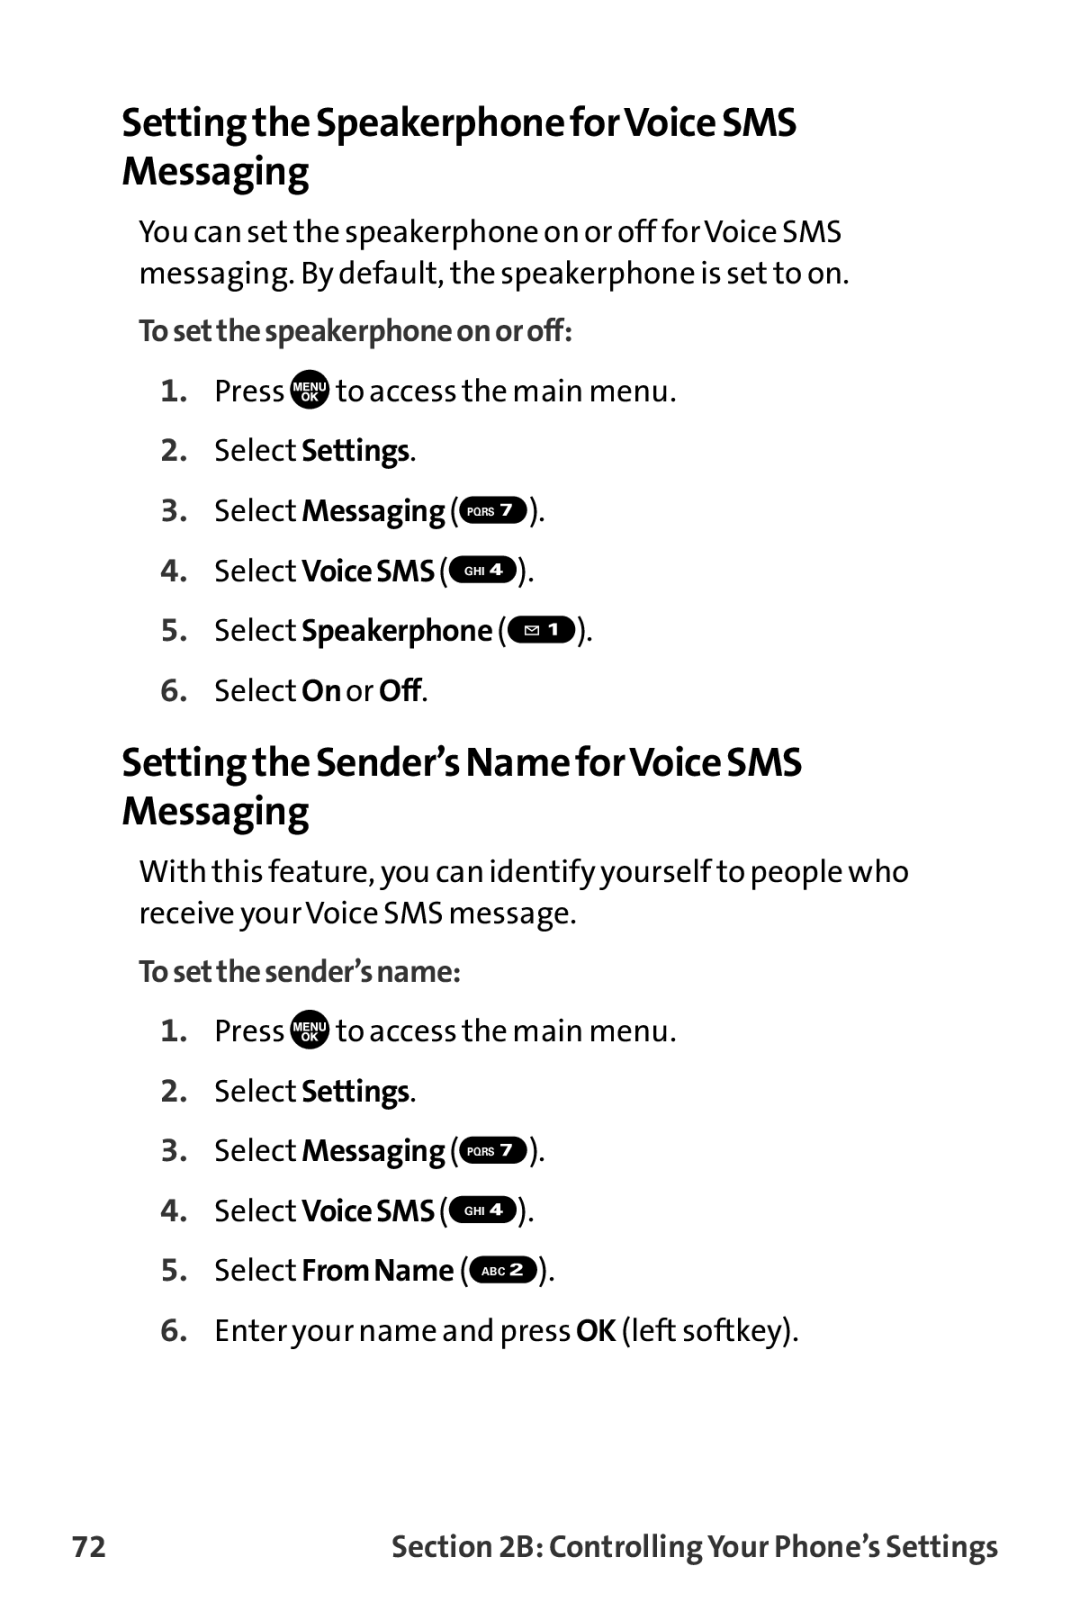 Sprint Nextel MM-7500 Setting the Speakerphone forVoice SMS Messaging, Setting the Sender’s Name forVoice SMS Messaging 